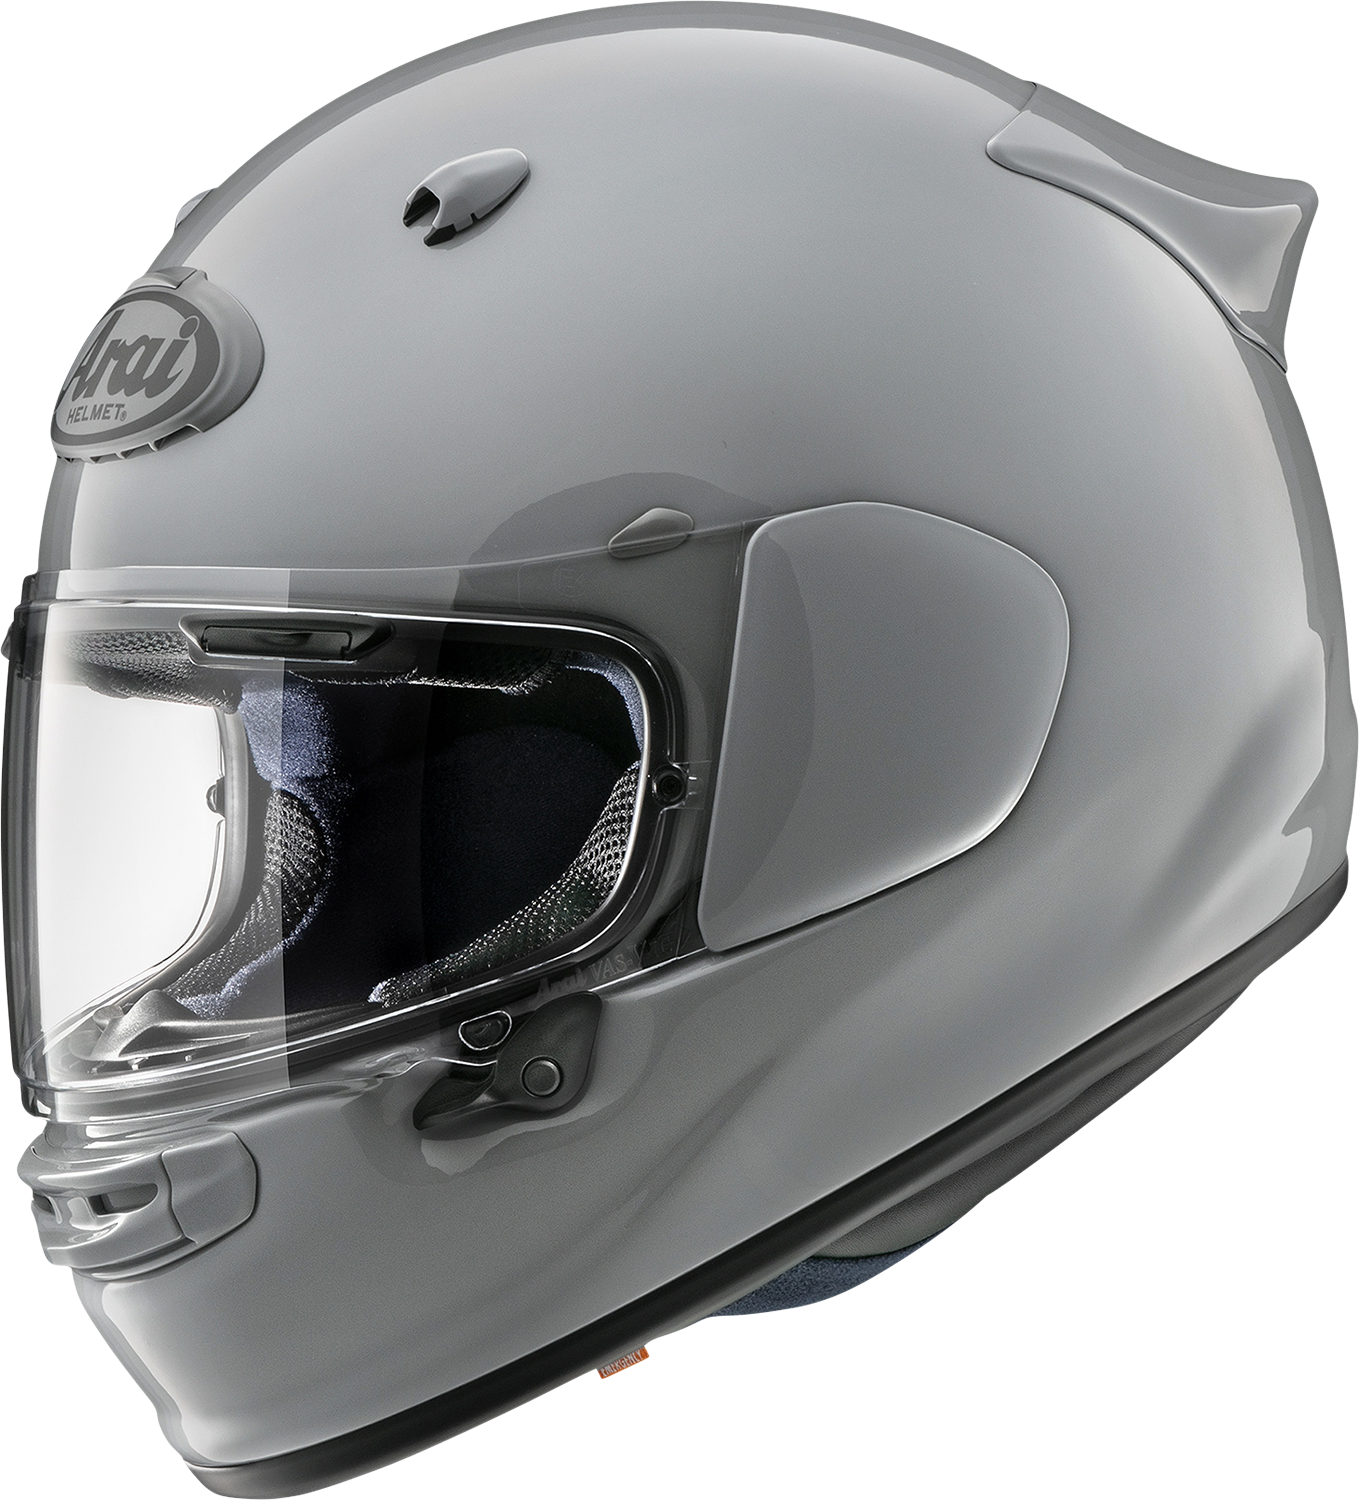 ARAI Contour-X Helmet - Solid - Light Gray - Small 0101-16050